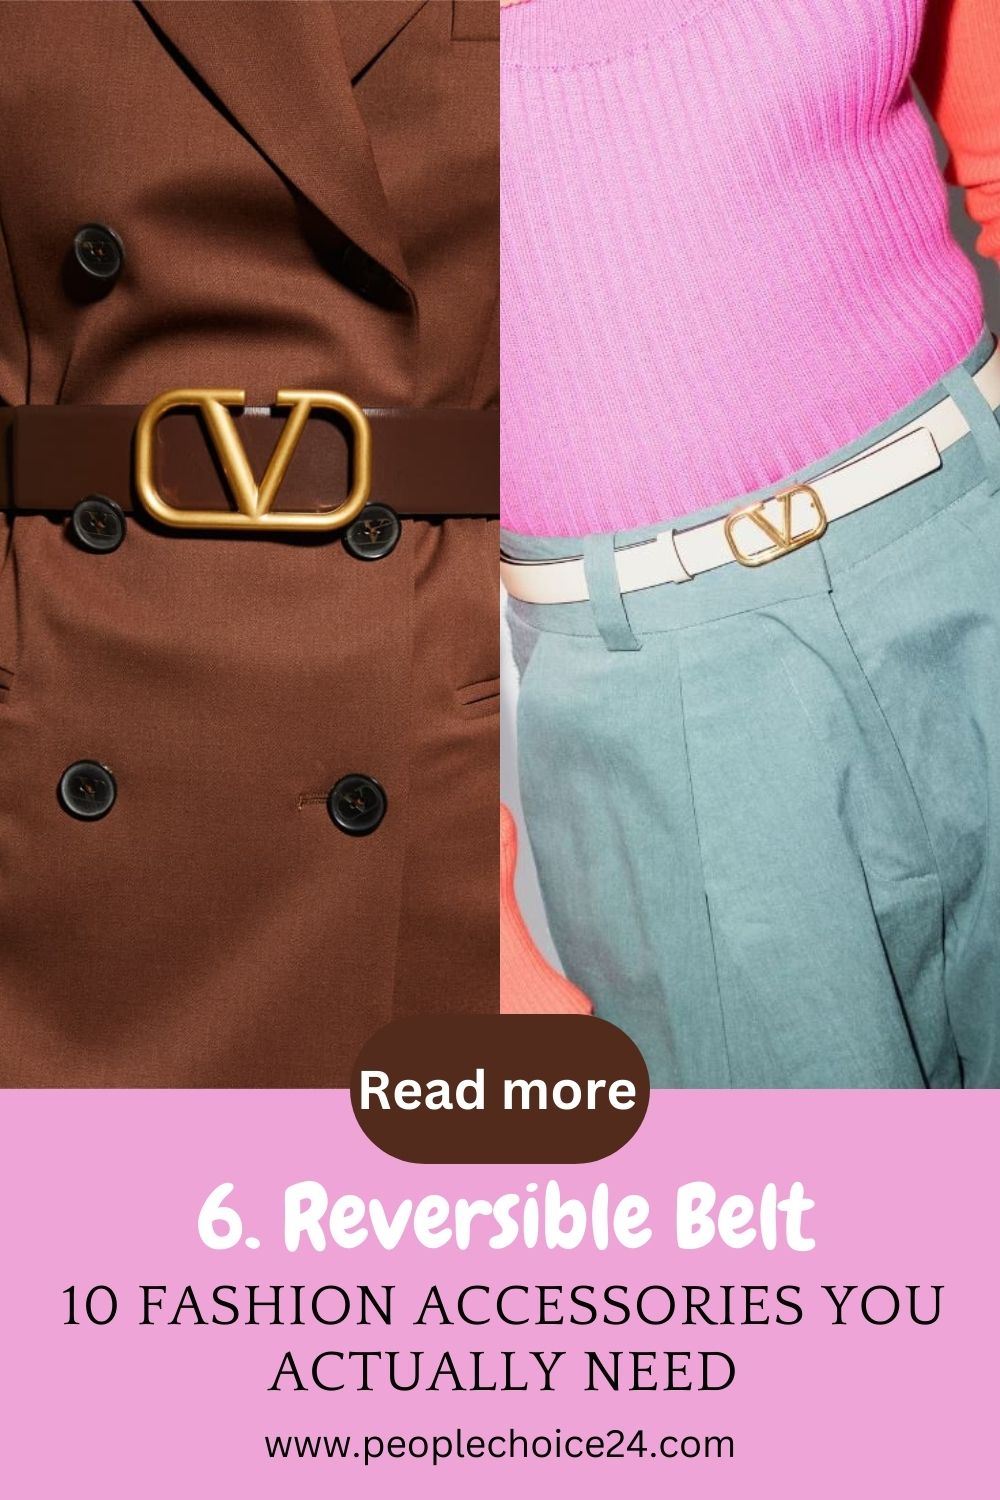 Reversible belt